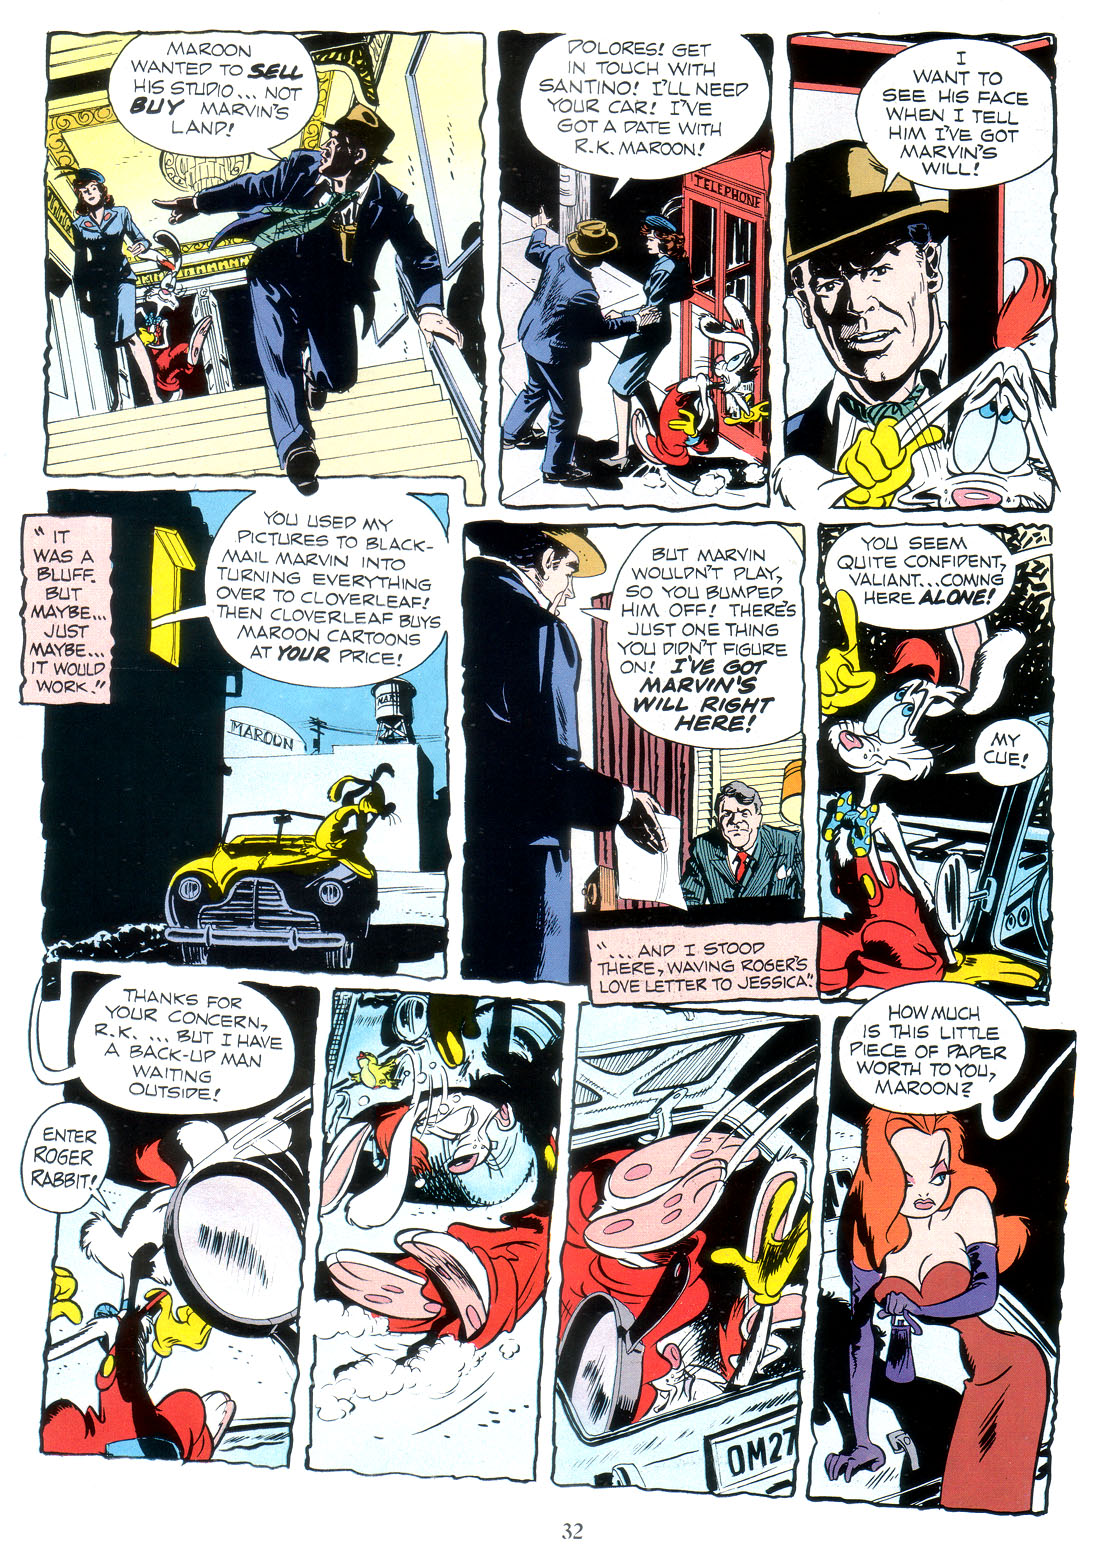 Marvel Graphic Novel issue 41 - Who Framed Roger Rabbit - Page 34